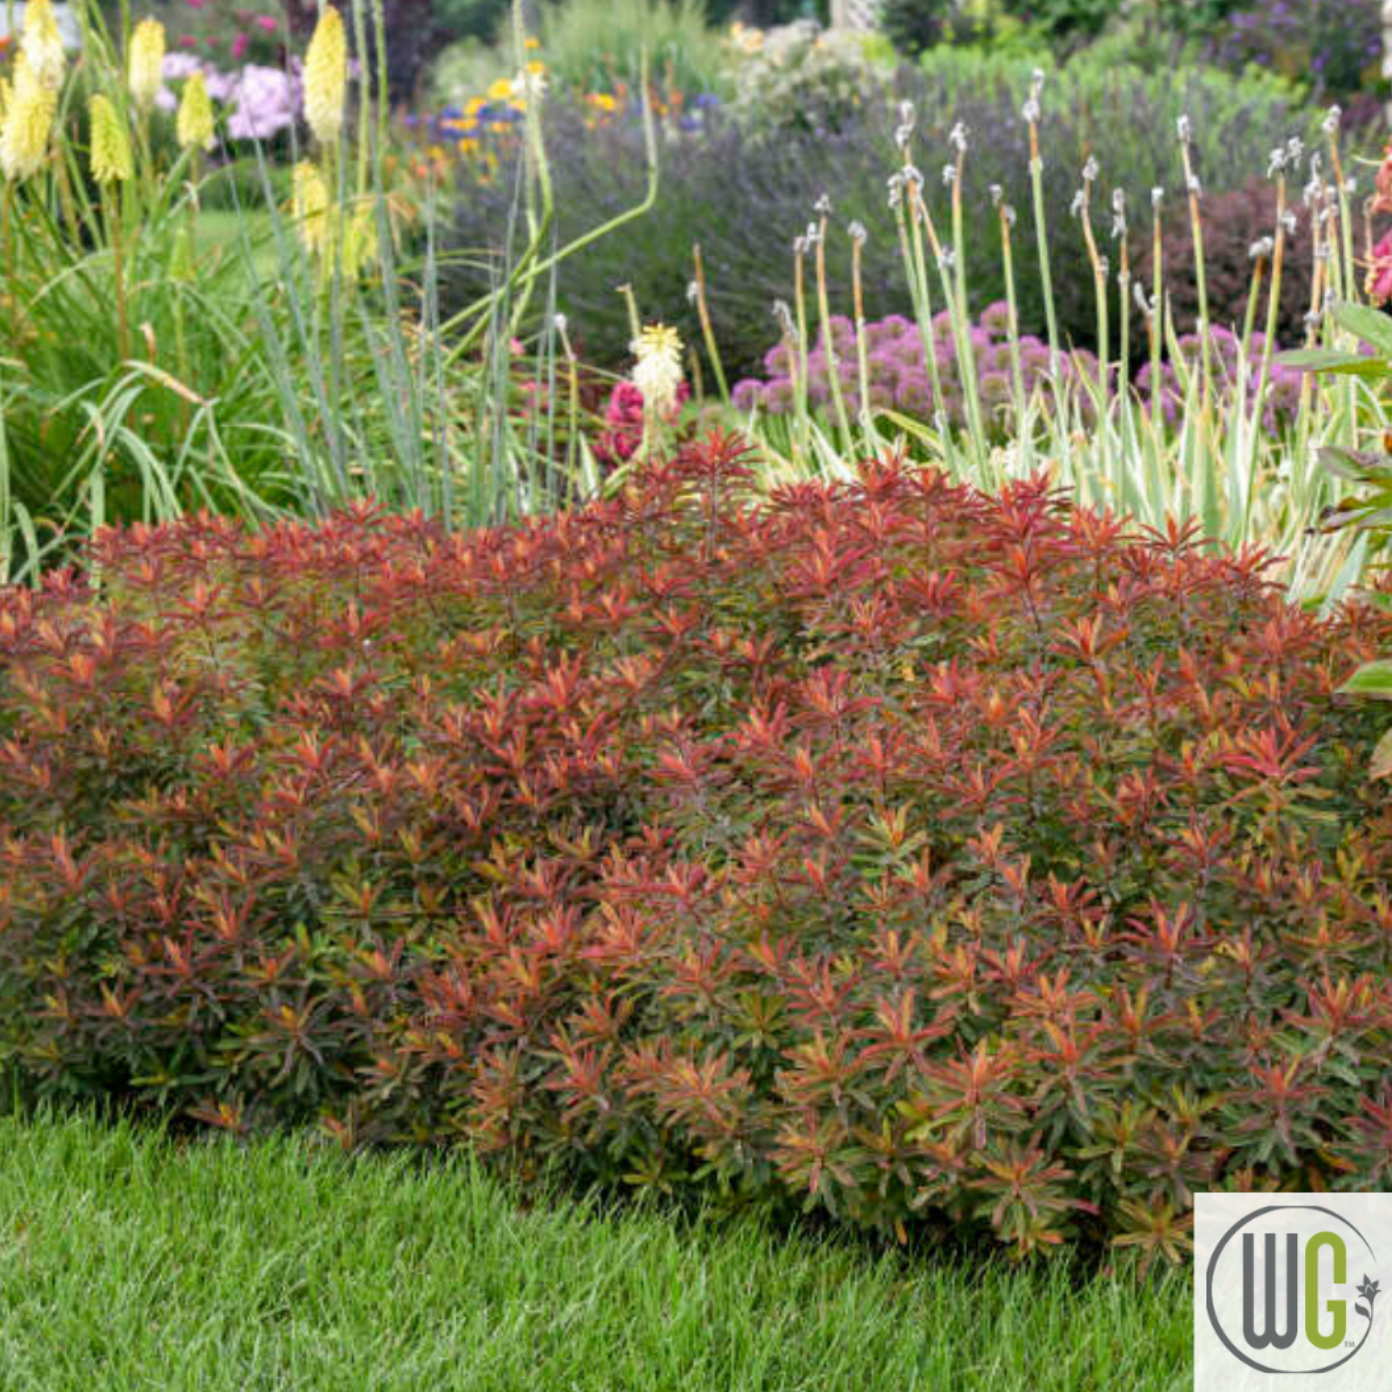 'Bonfire' Cushion Spurge | Euphorbia polychroma 'Bonfire'